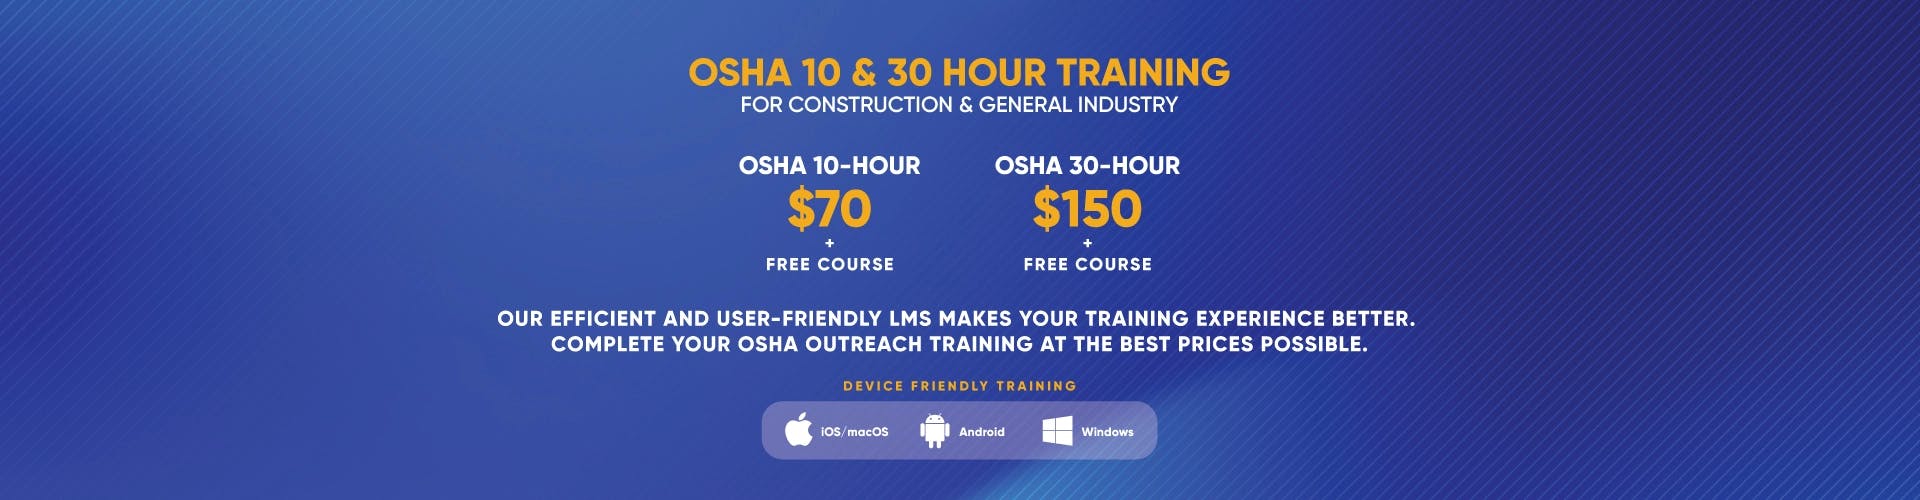 OSHA 10 & 30 HOUR